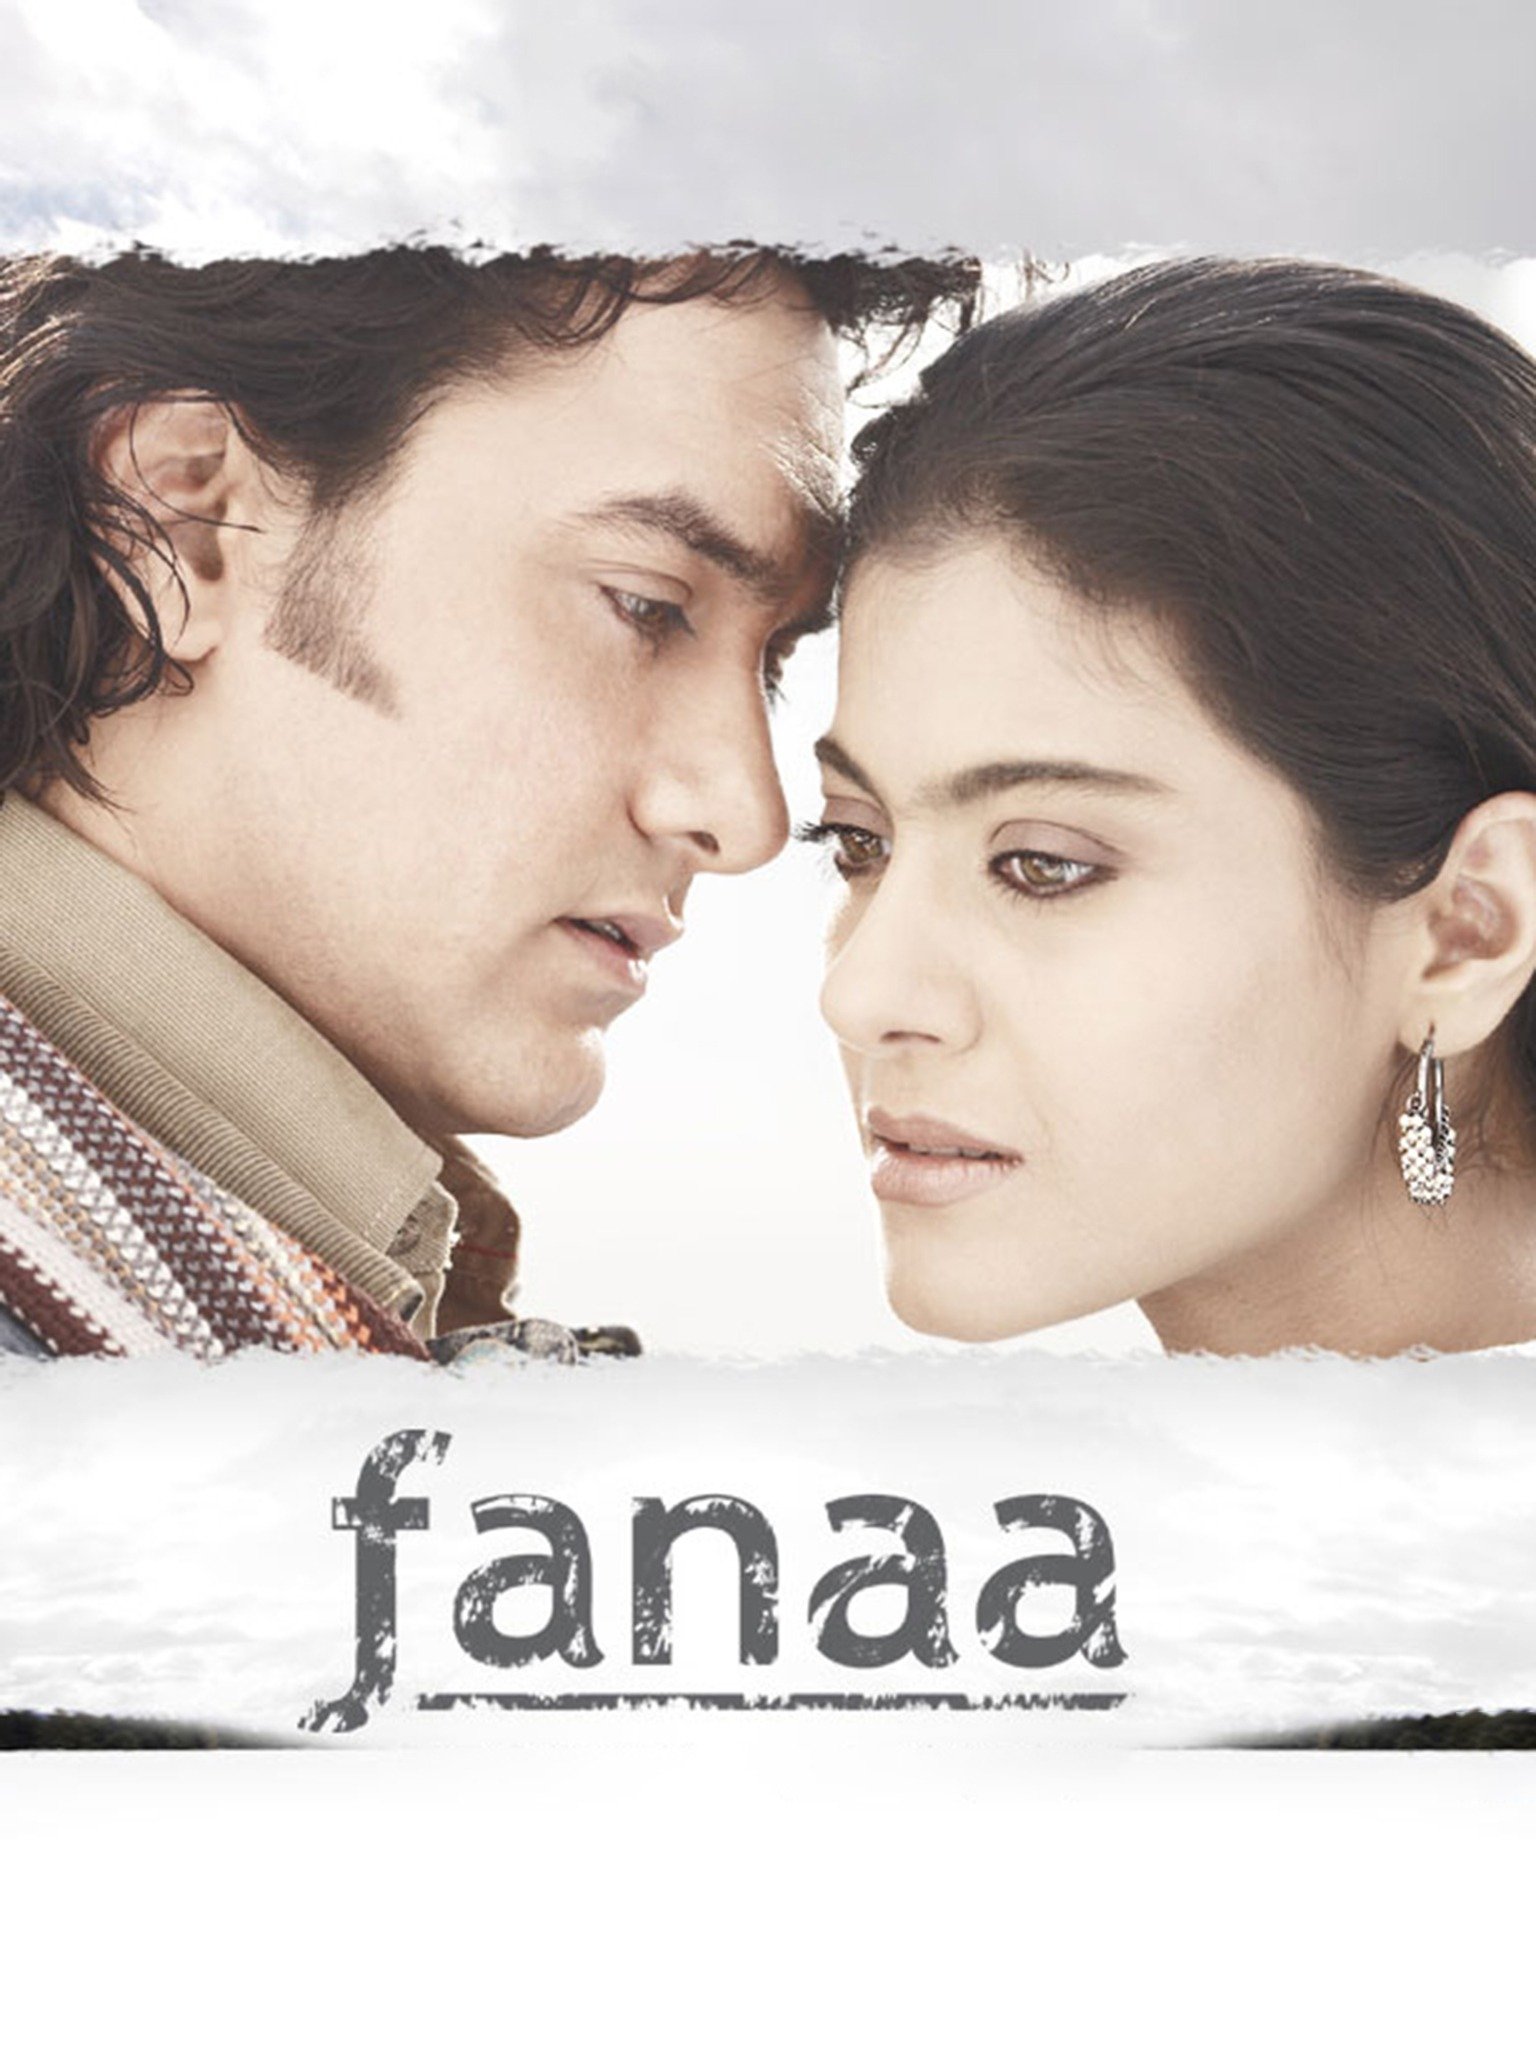 watch fanaa movie with english subtitles